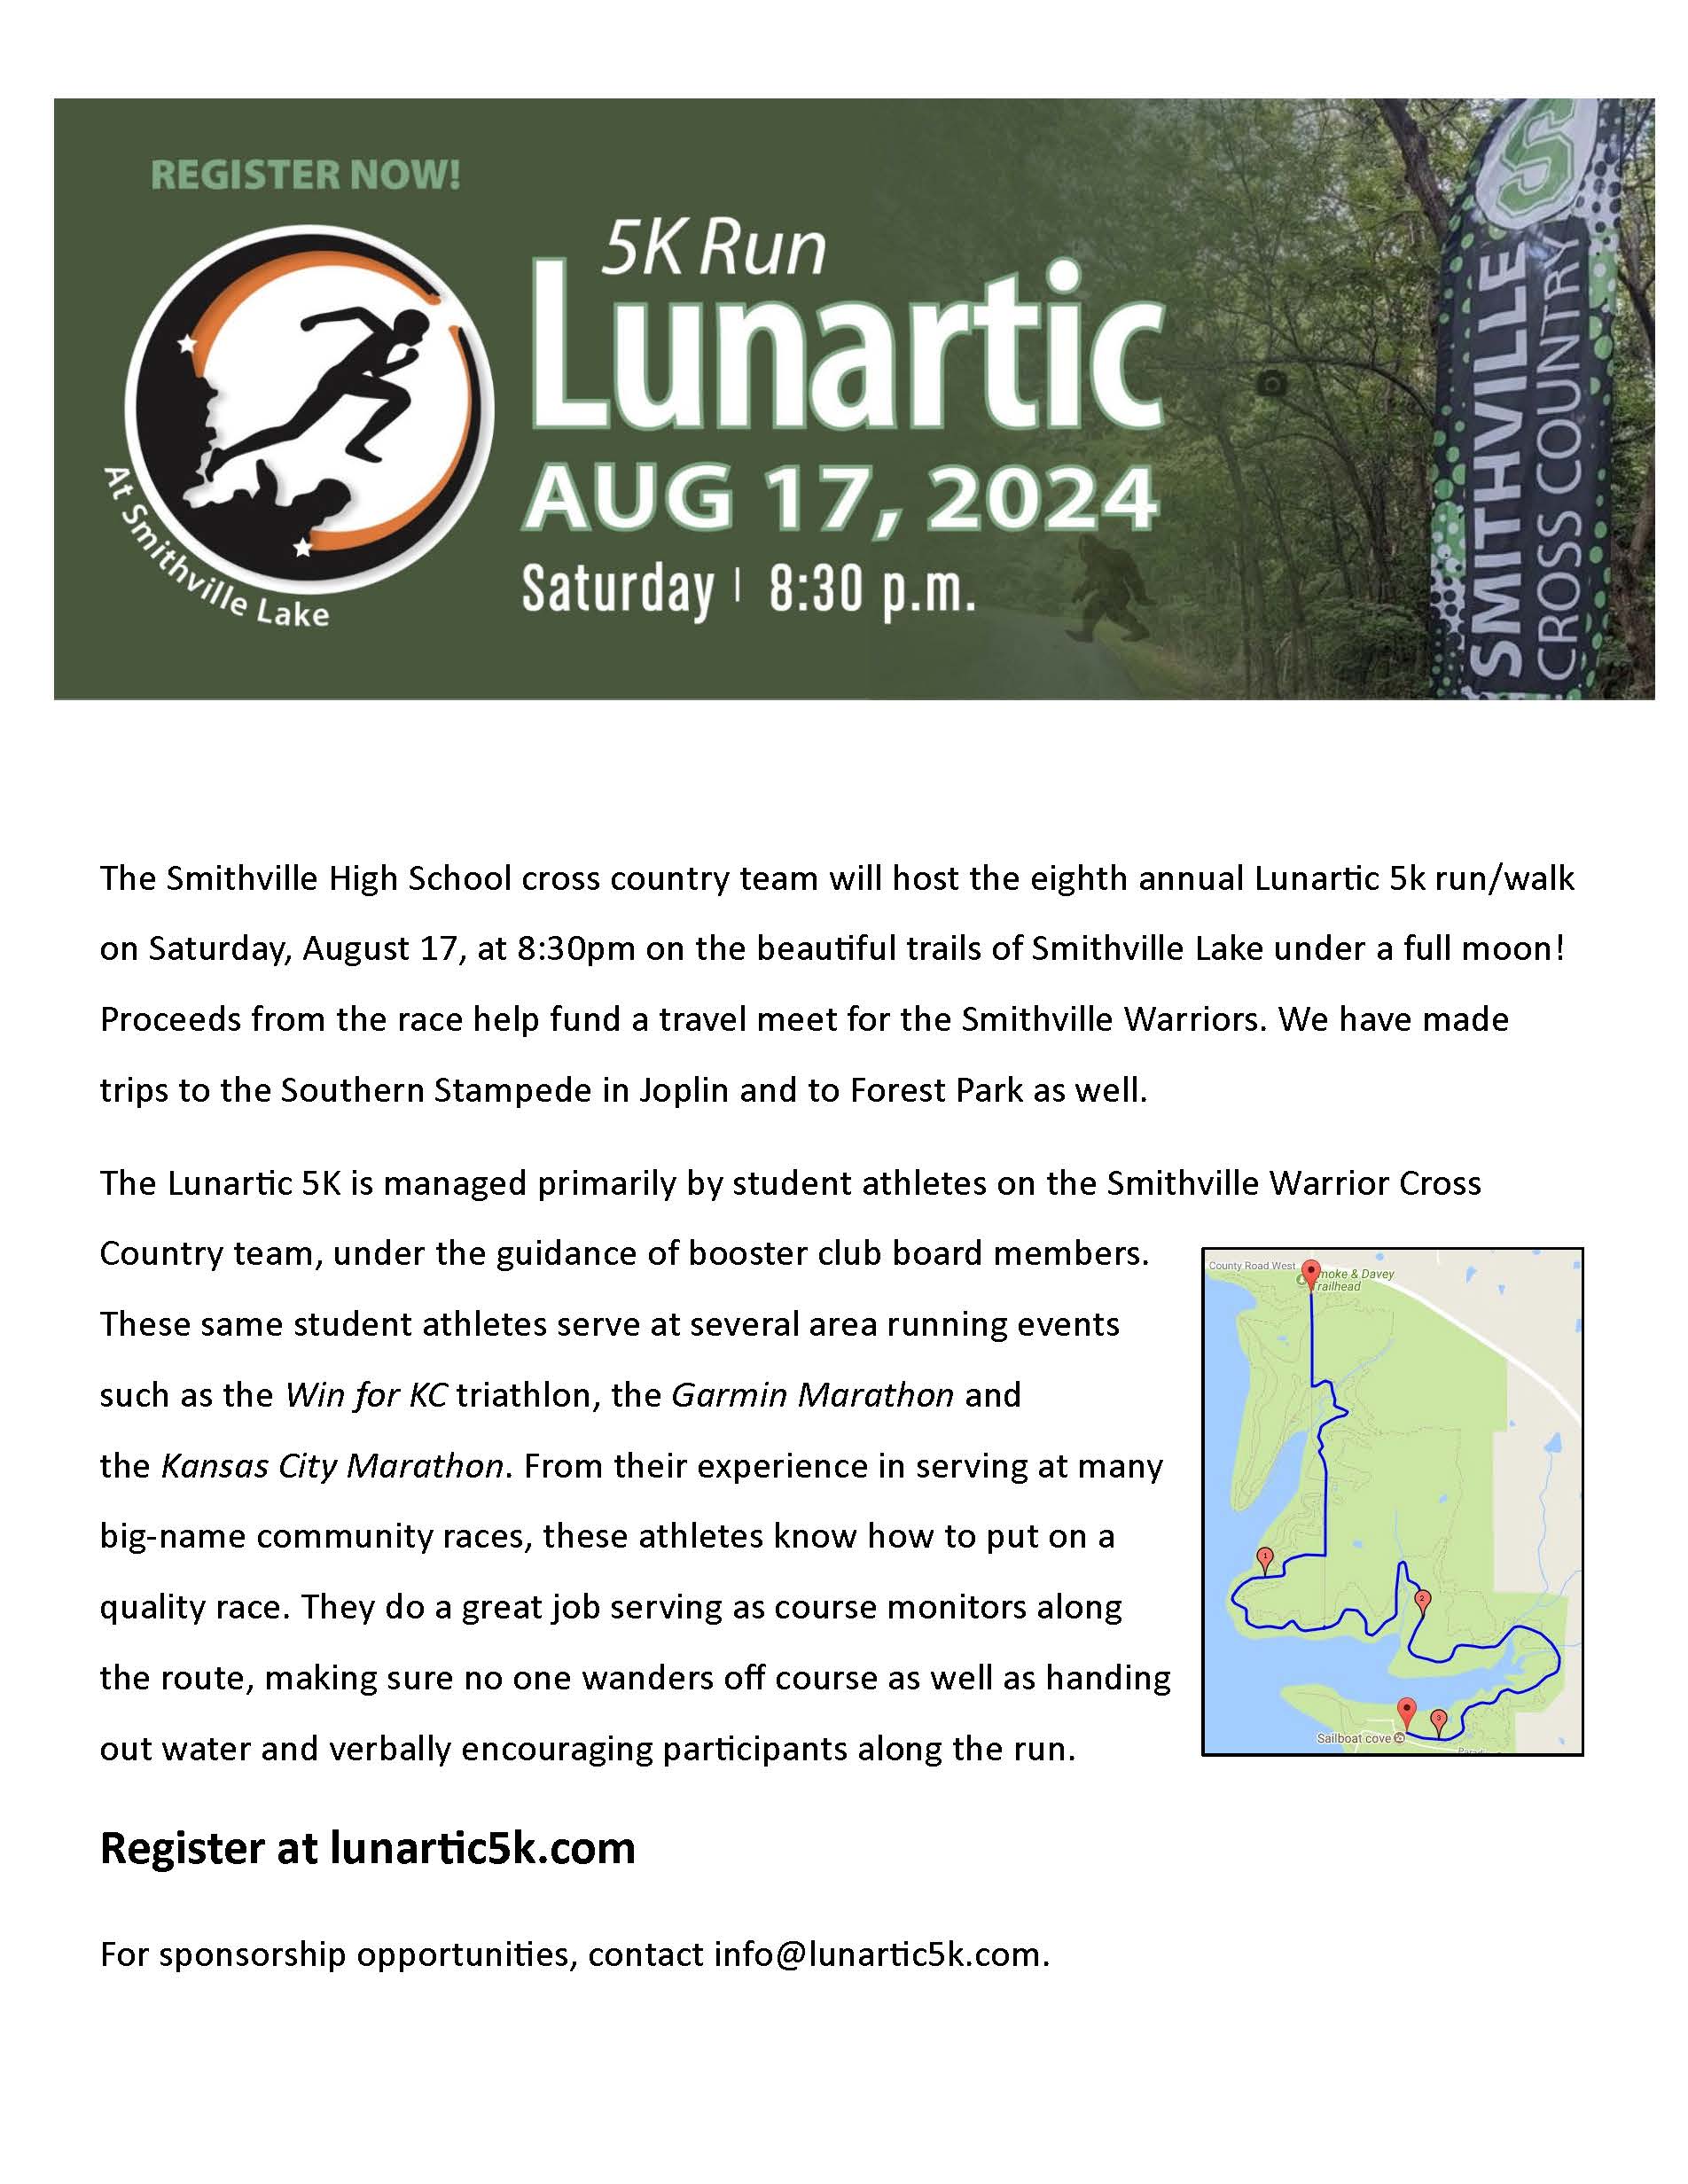 Lunartic 5K Run August 17, 2024 8:30 pm